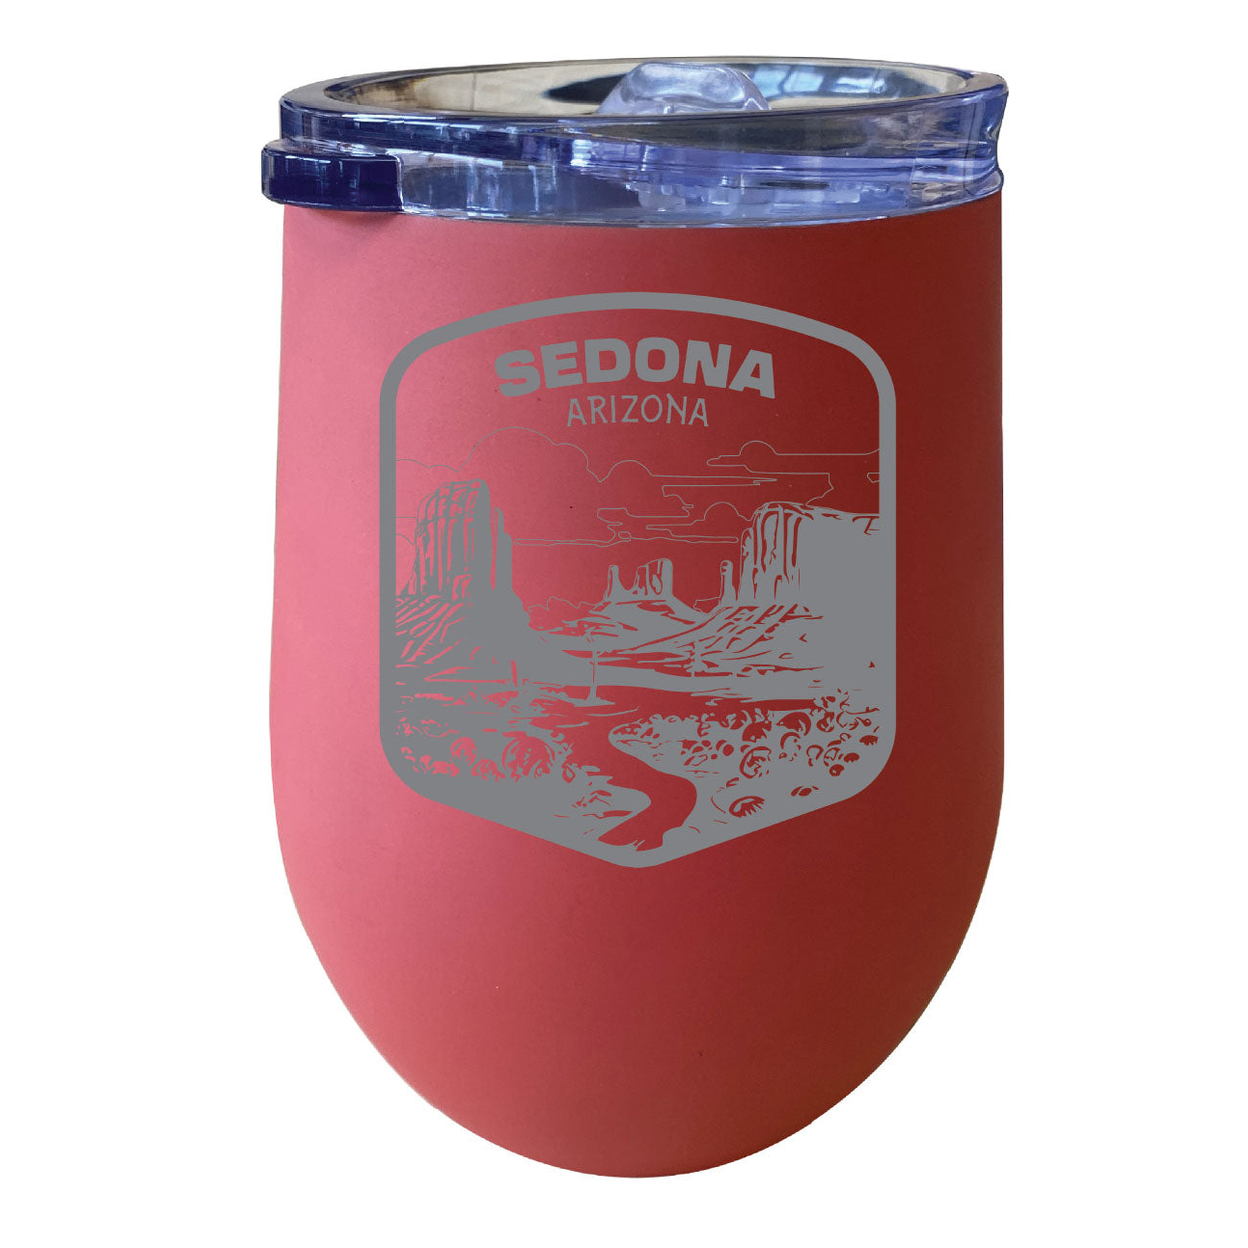 Sedona Arizona Souvenir 12 Oz Engraved Insulated Wine Stainless Steel Tumbler - Coral,,Single Unit